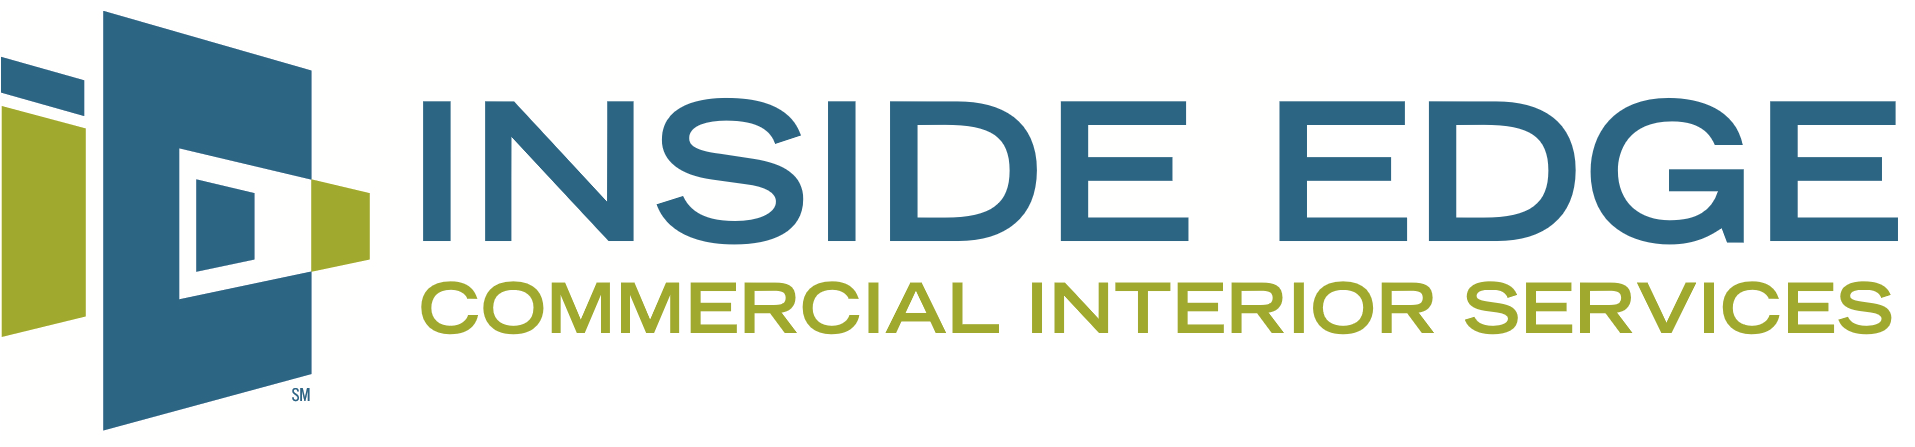 Inside Edge CISInside Edge acquires JKP Flooring - Inside Edge CIS